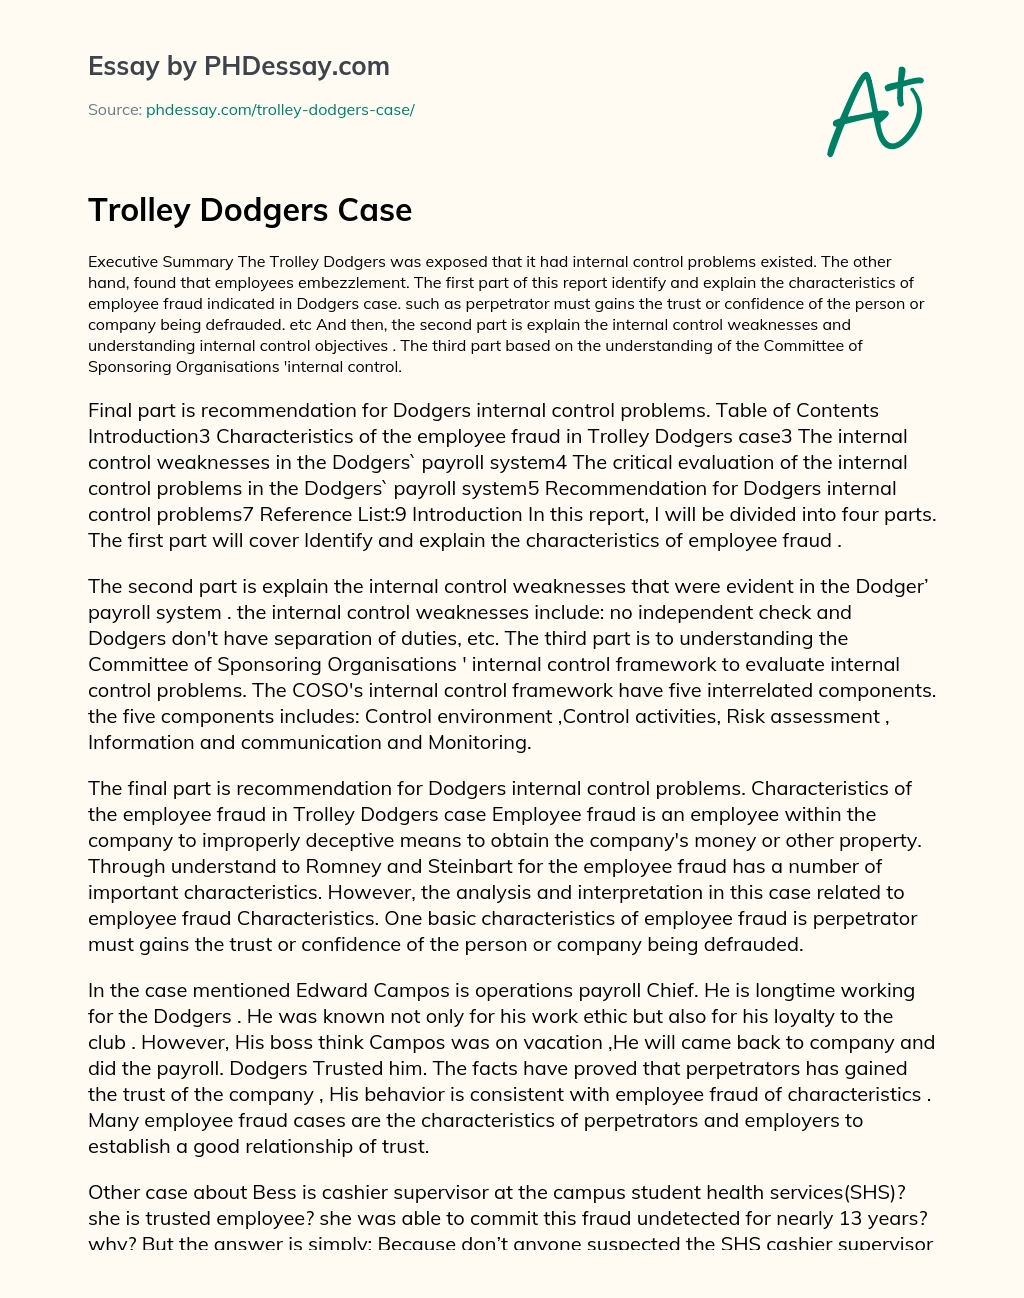 Trolley Dodgers Case essay